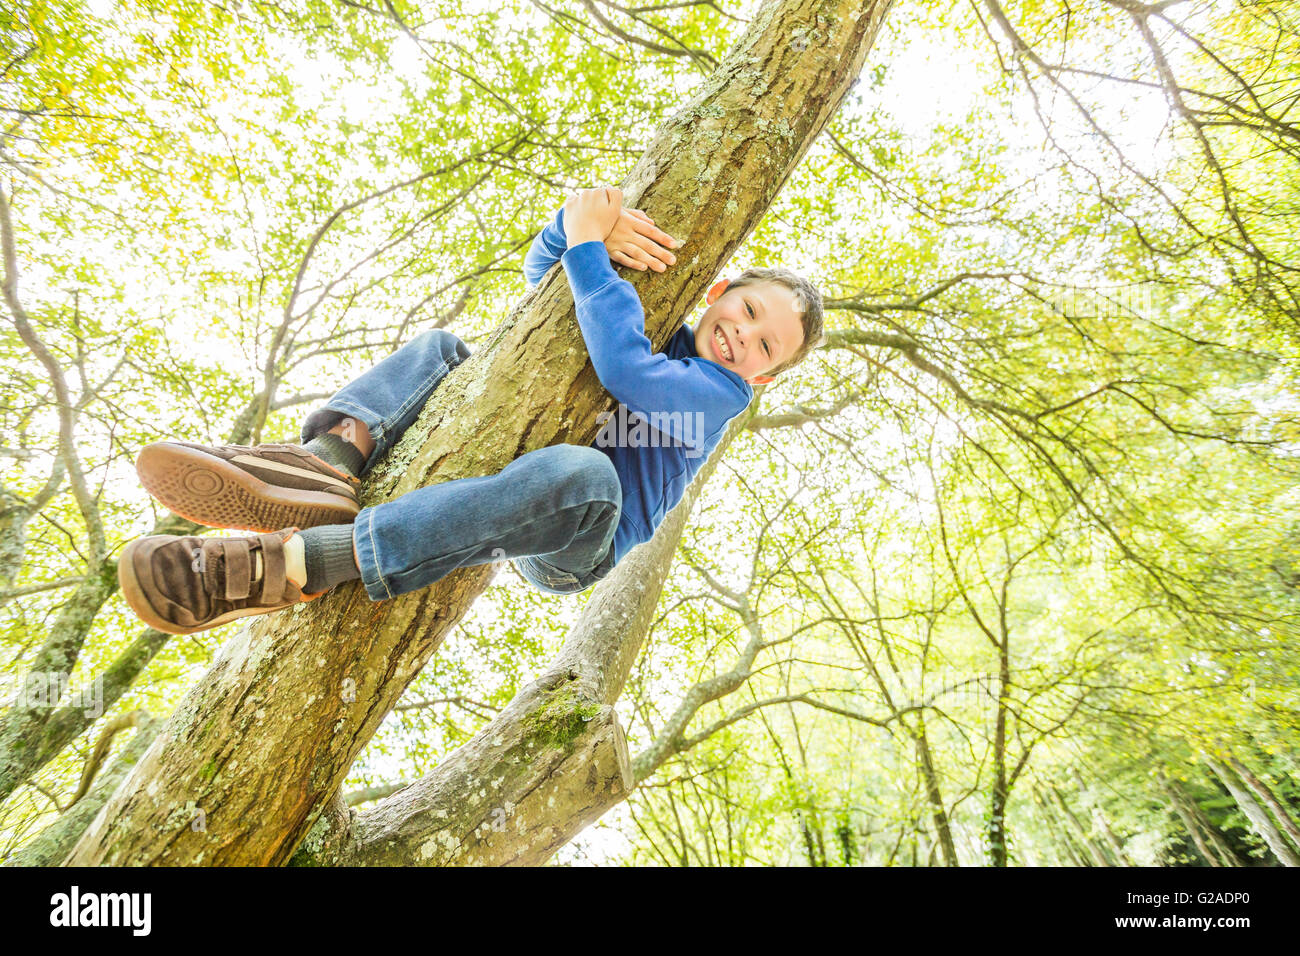 Smiling boy (6-7) climbing tree Stock Photo